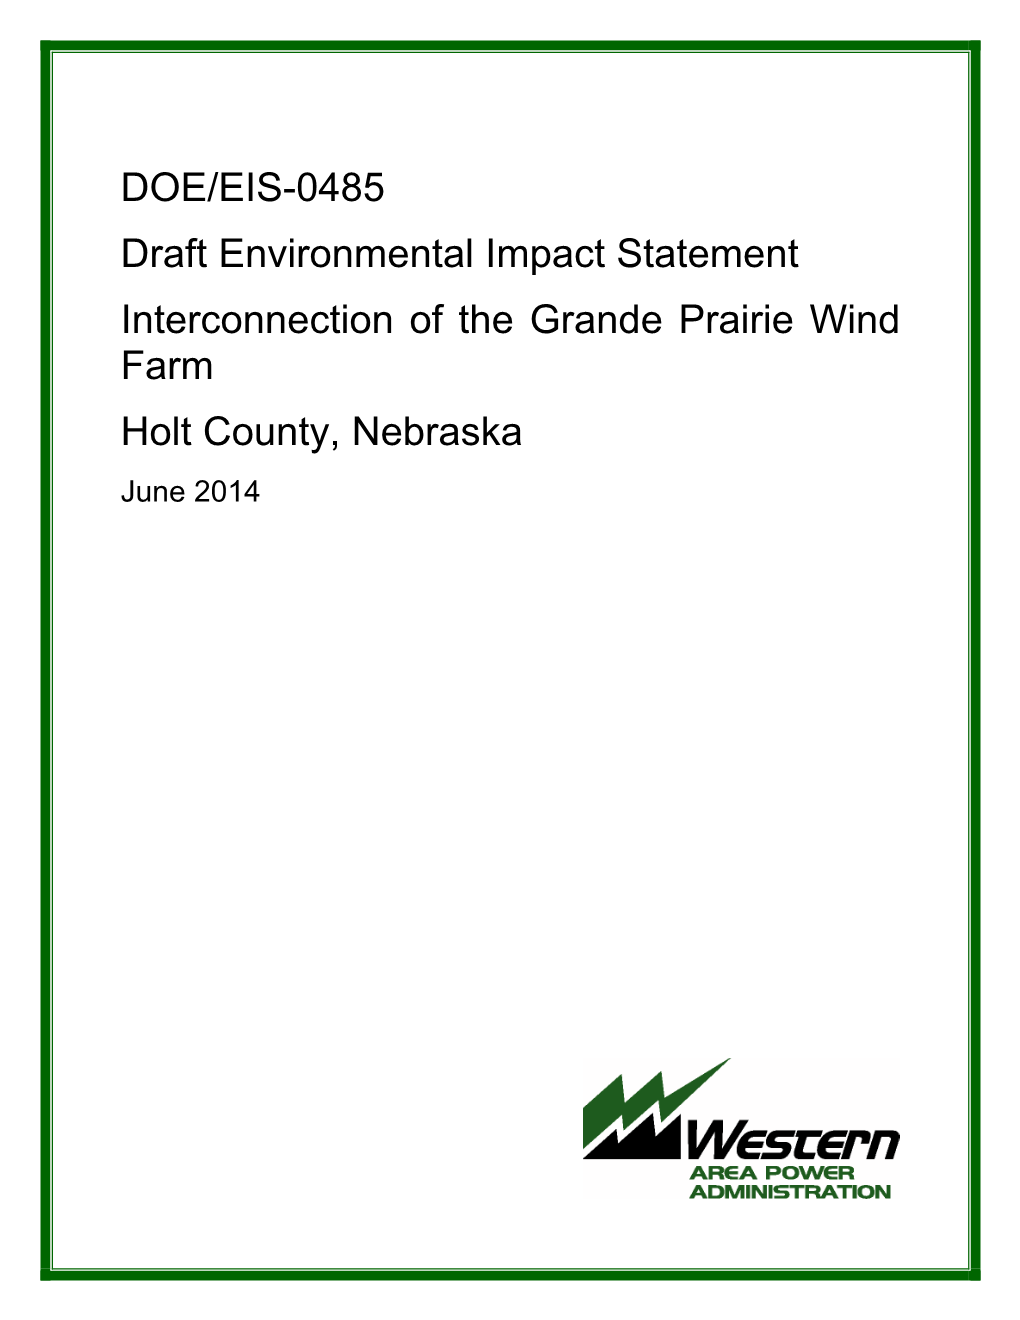 DOE/EIS-0485 Draft Environmental Impact Statement Grande Prairie